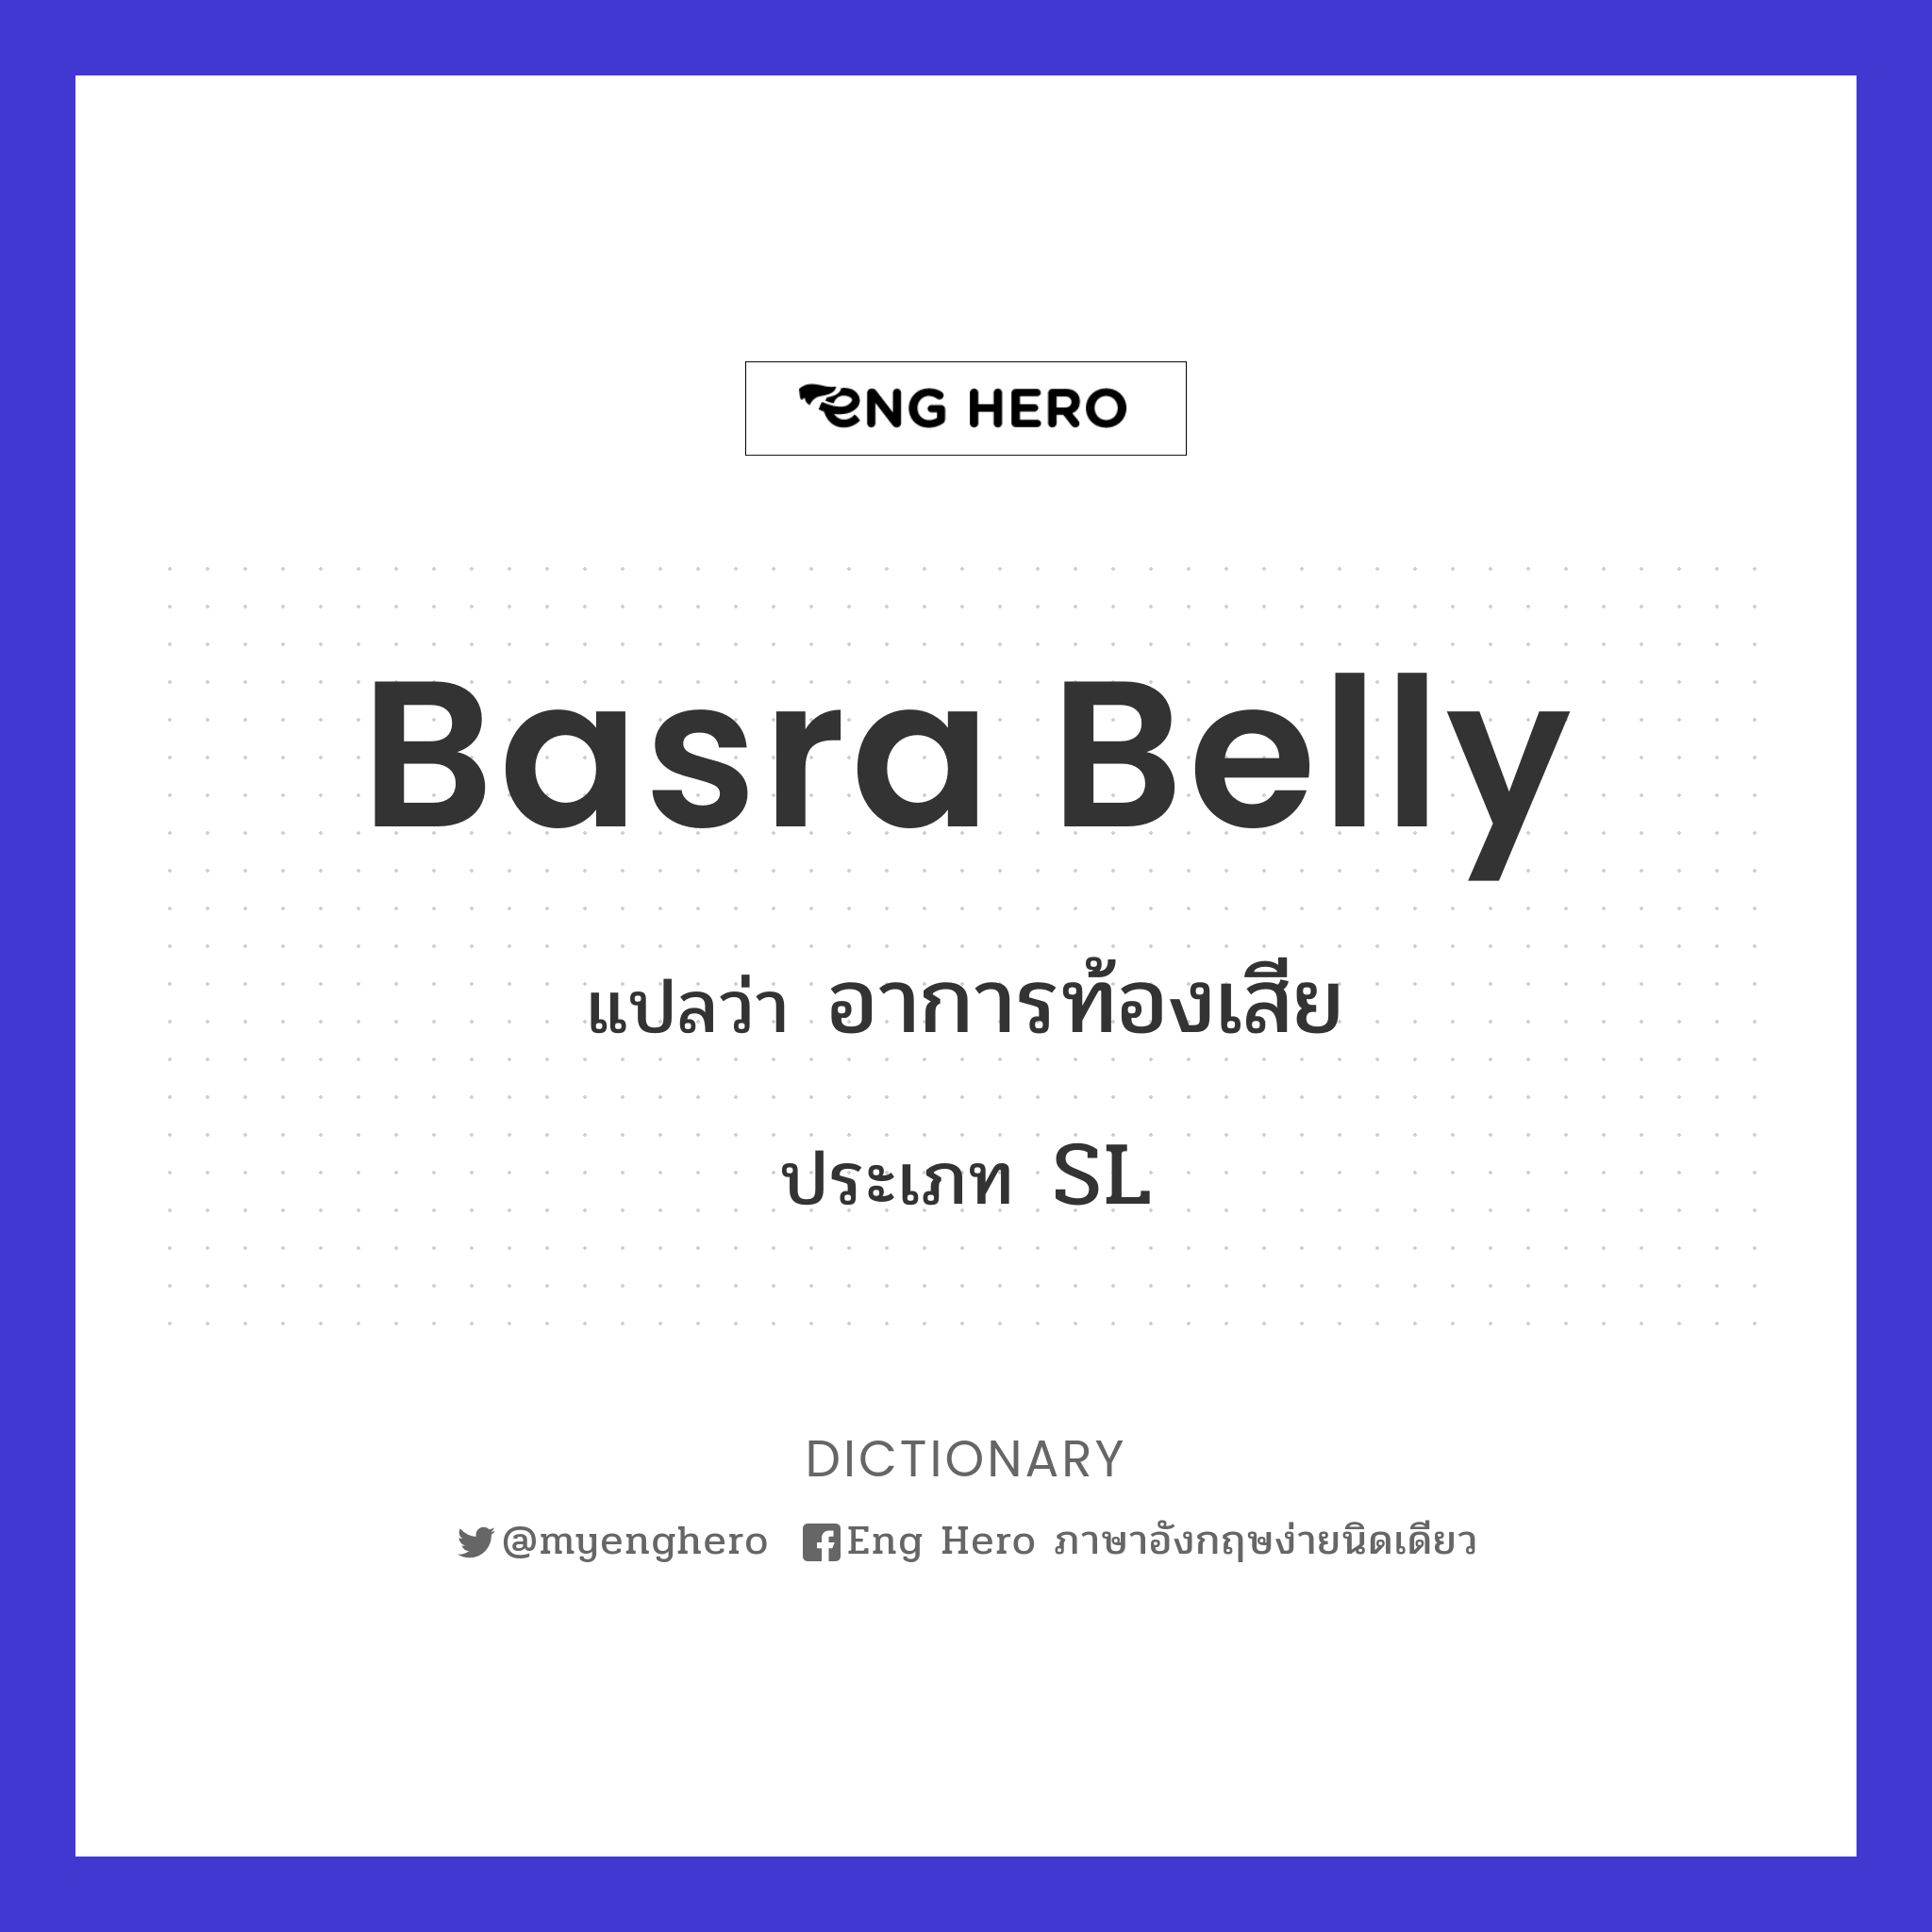 Basra belly